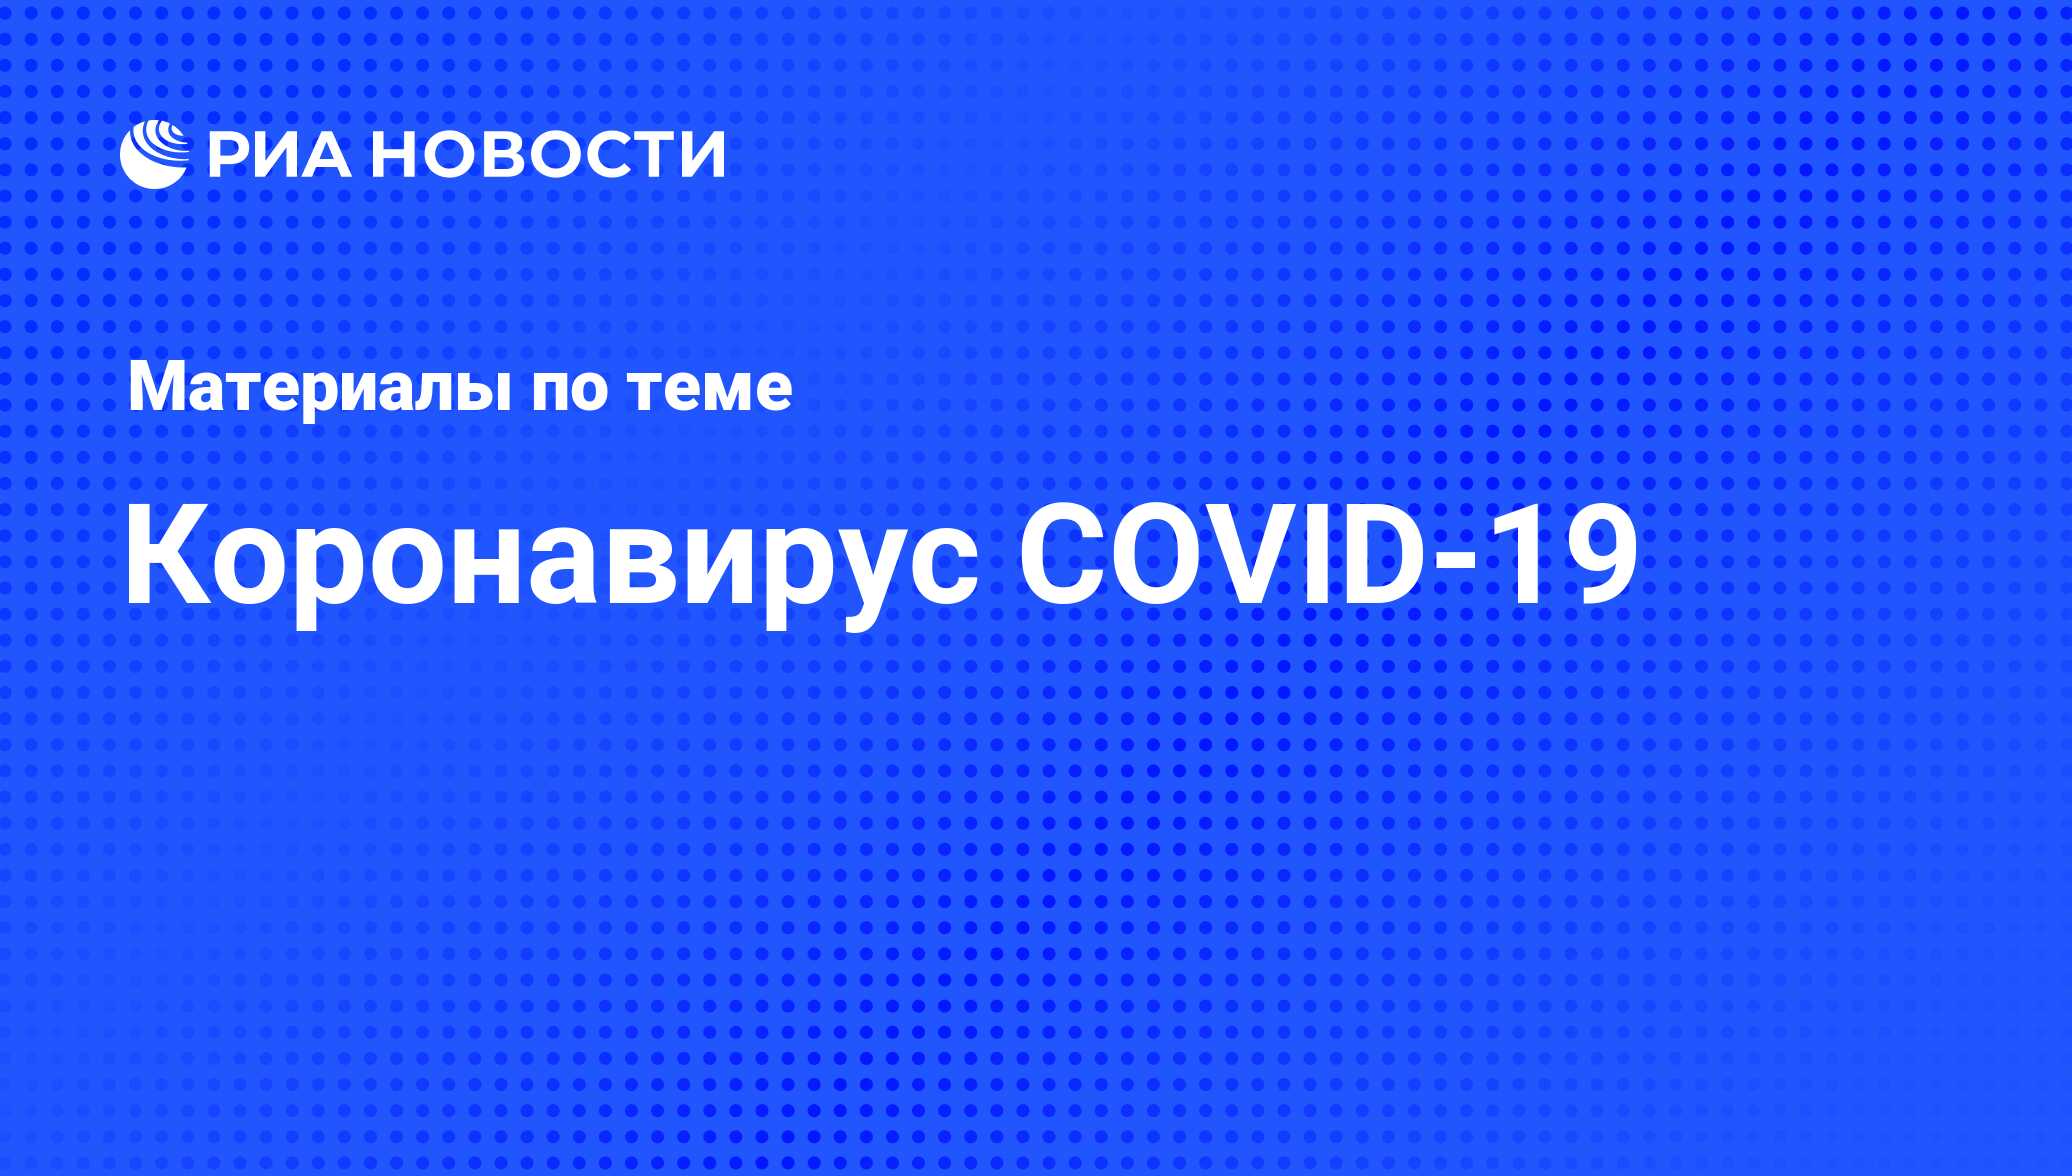  Коронавирус COVID-19